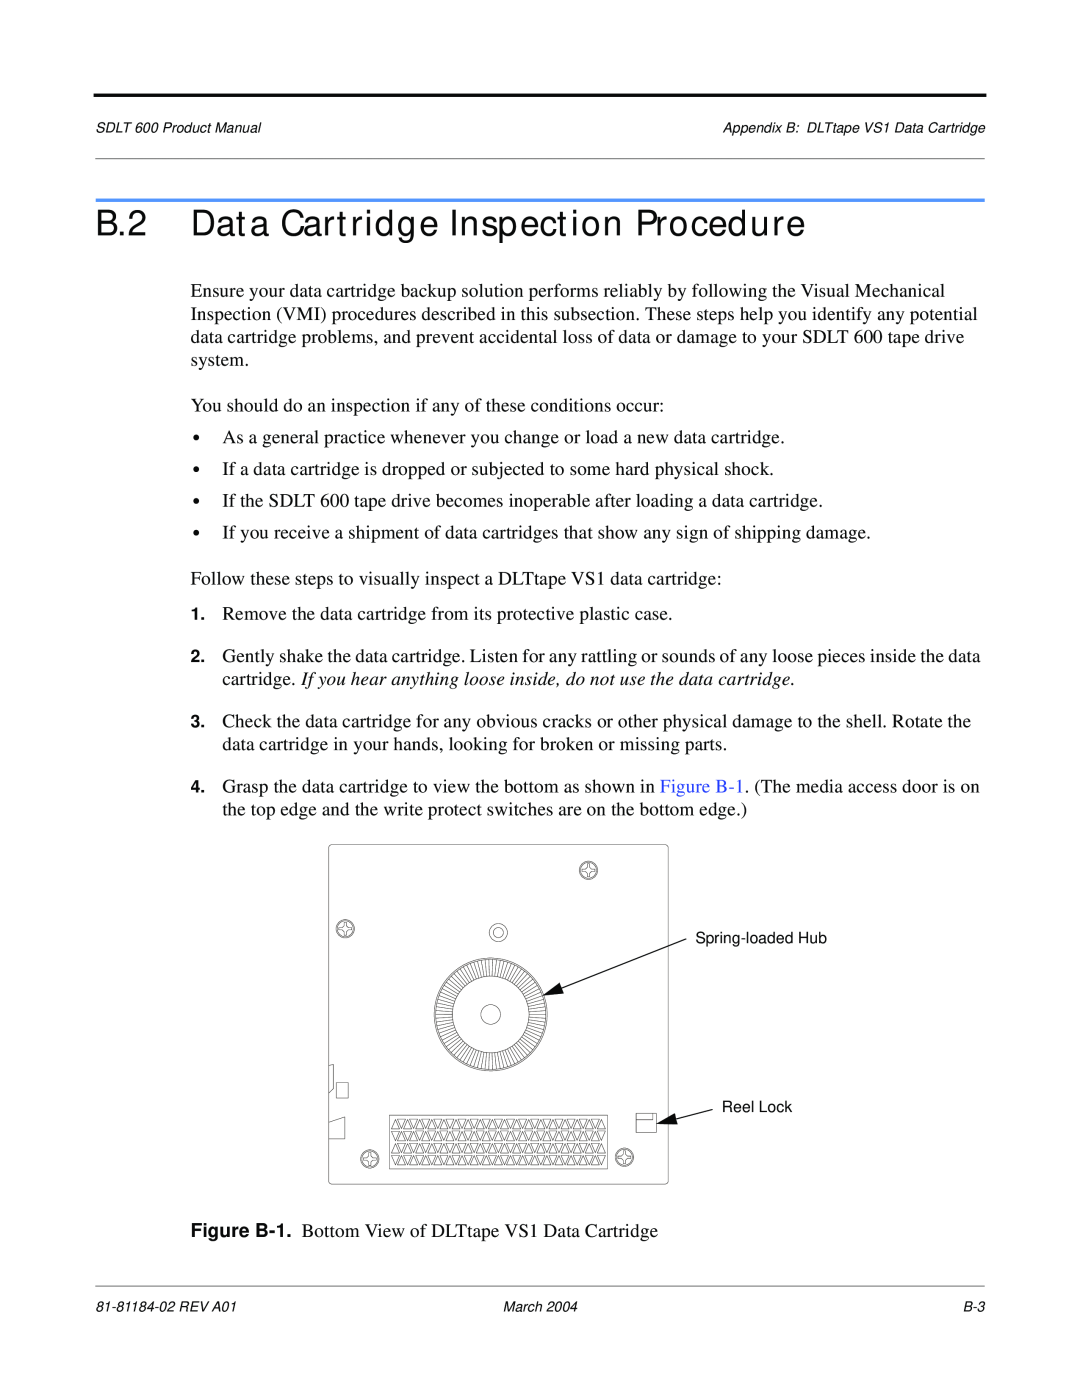 Tandberg Data 600 manual B.2 Data Cartridge Inspection Procedure, Appendix B DLTtape VS1 Data Cartridge 